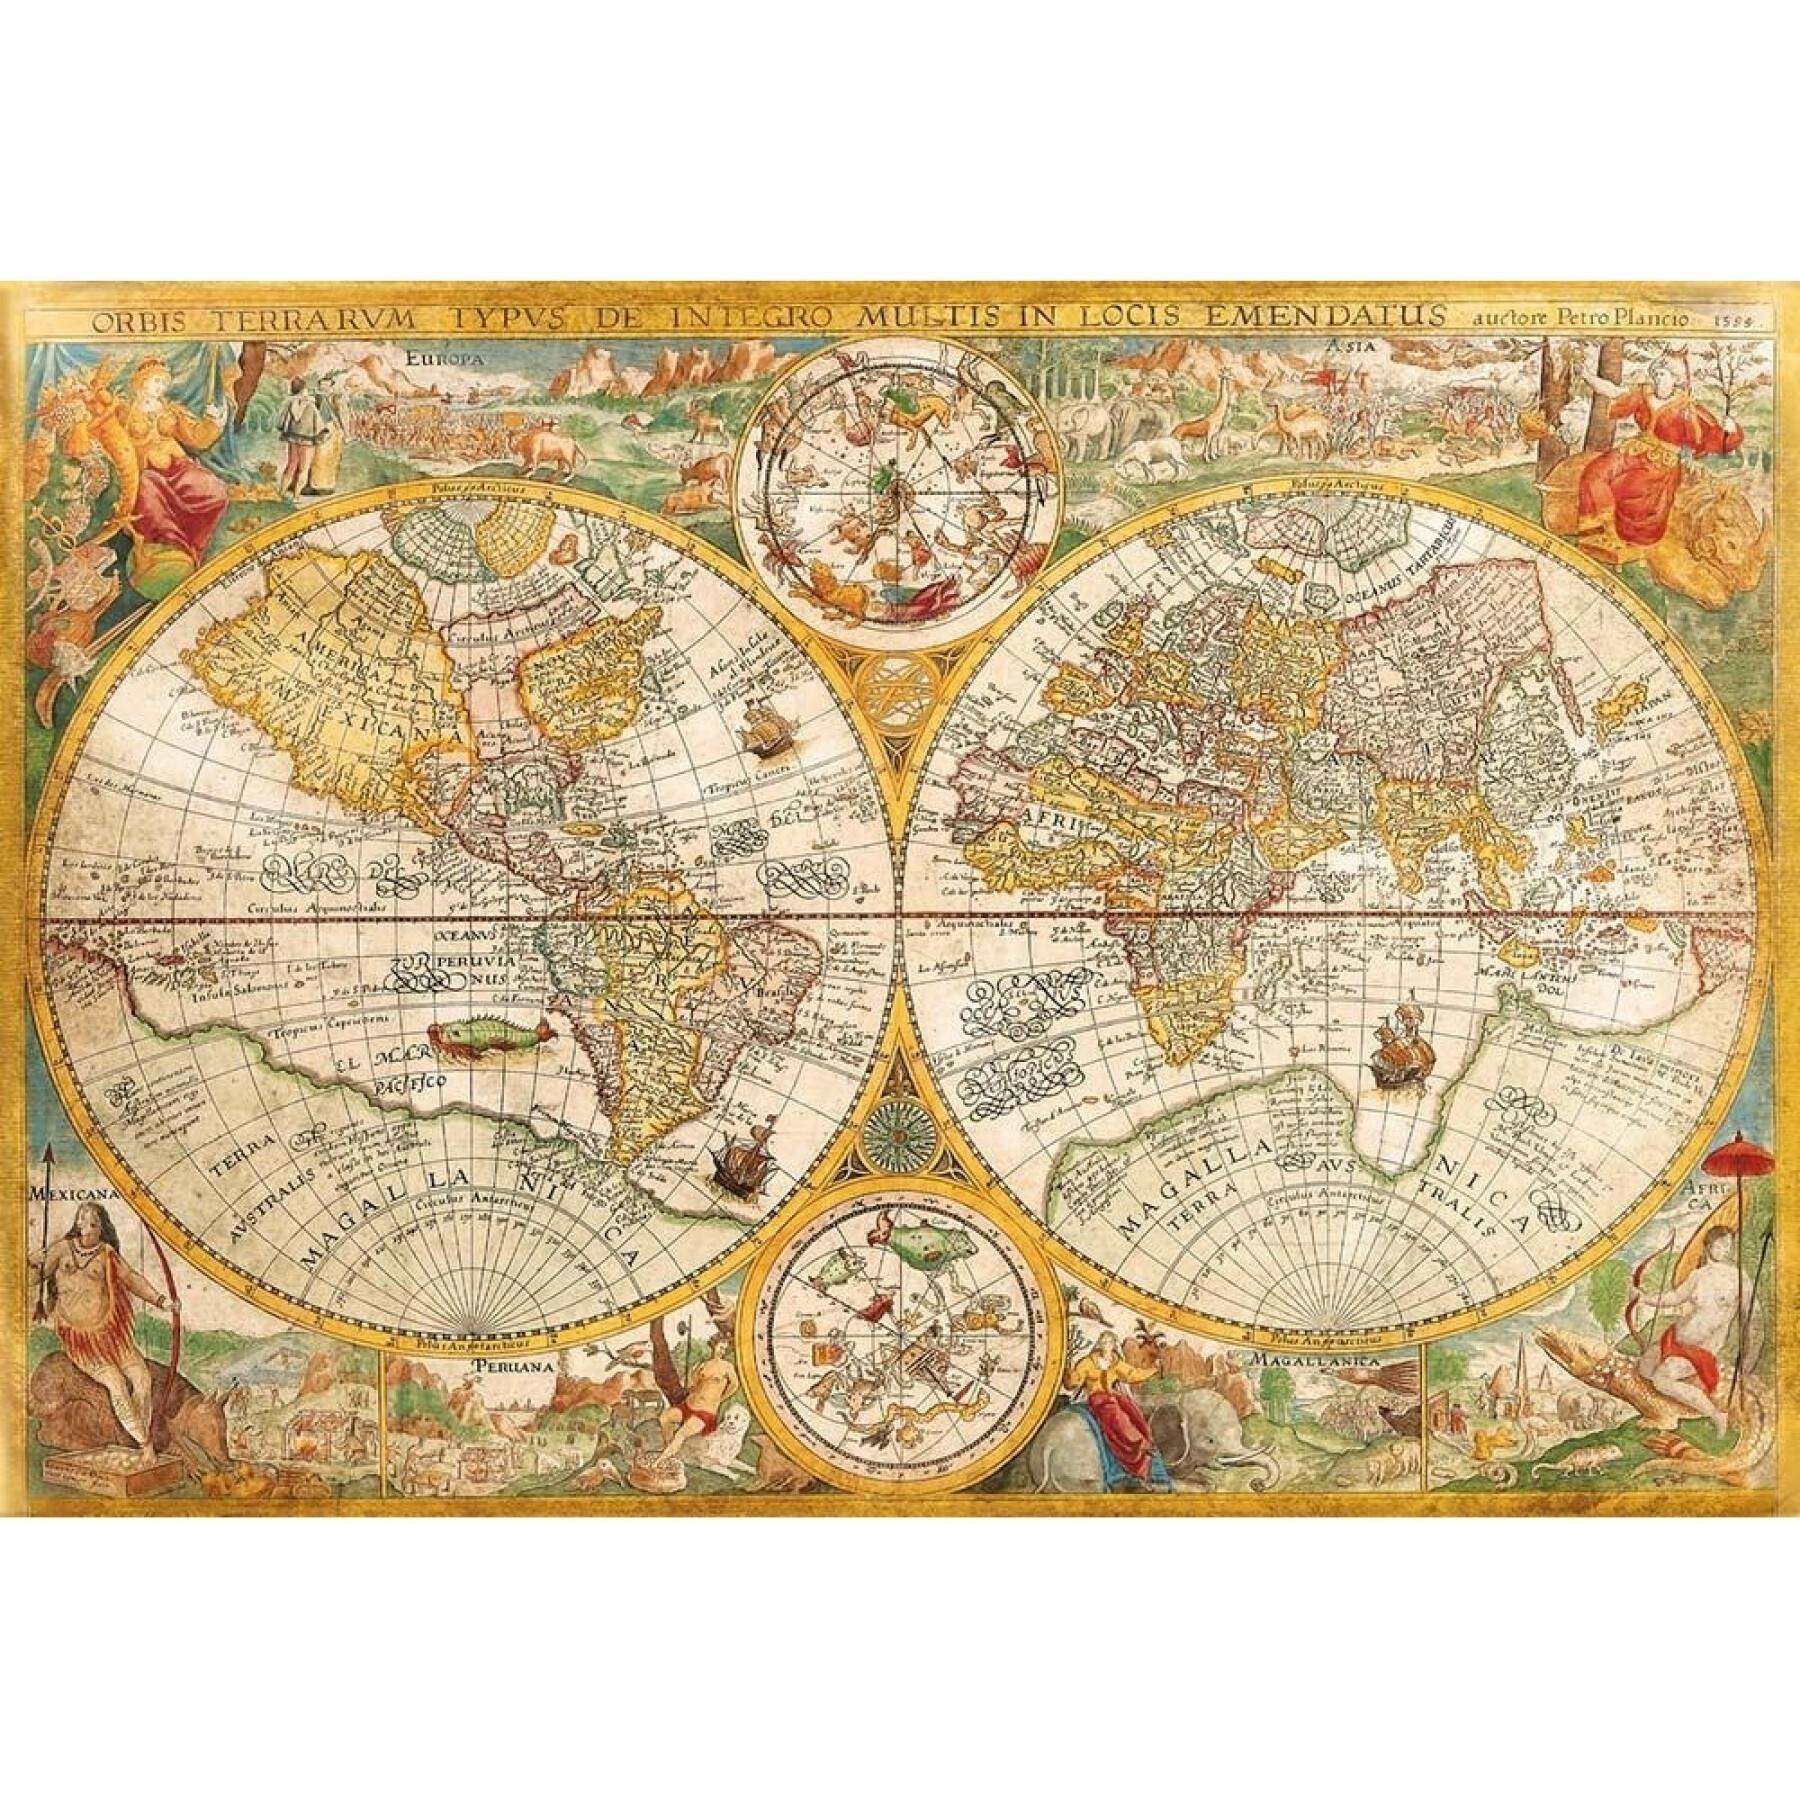 Puzzle mit 2000 Teilen alte Karte Clementoni